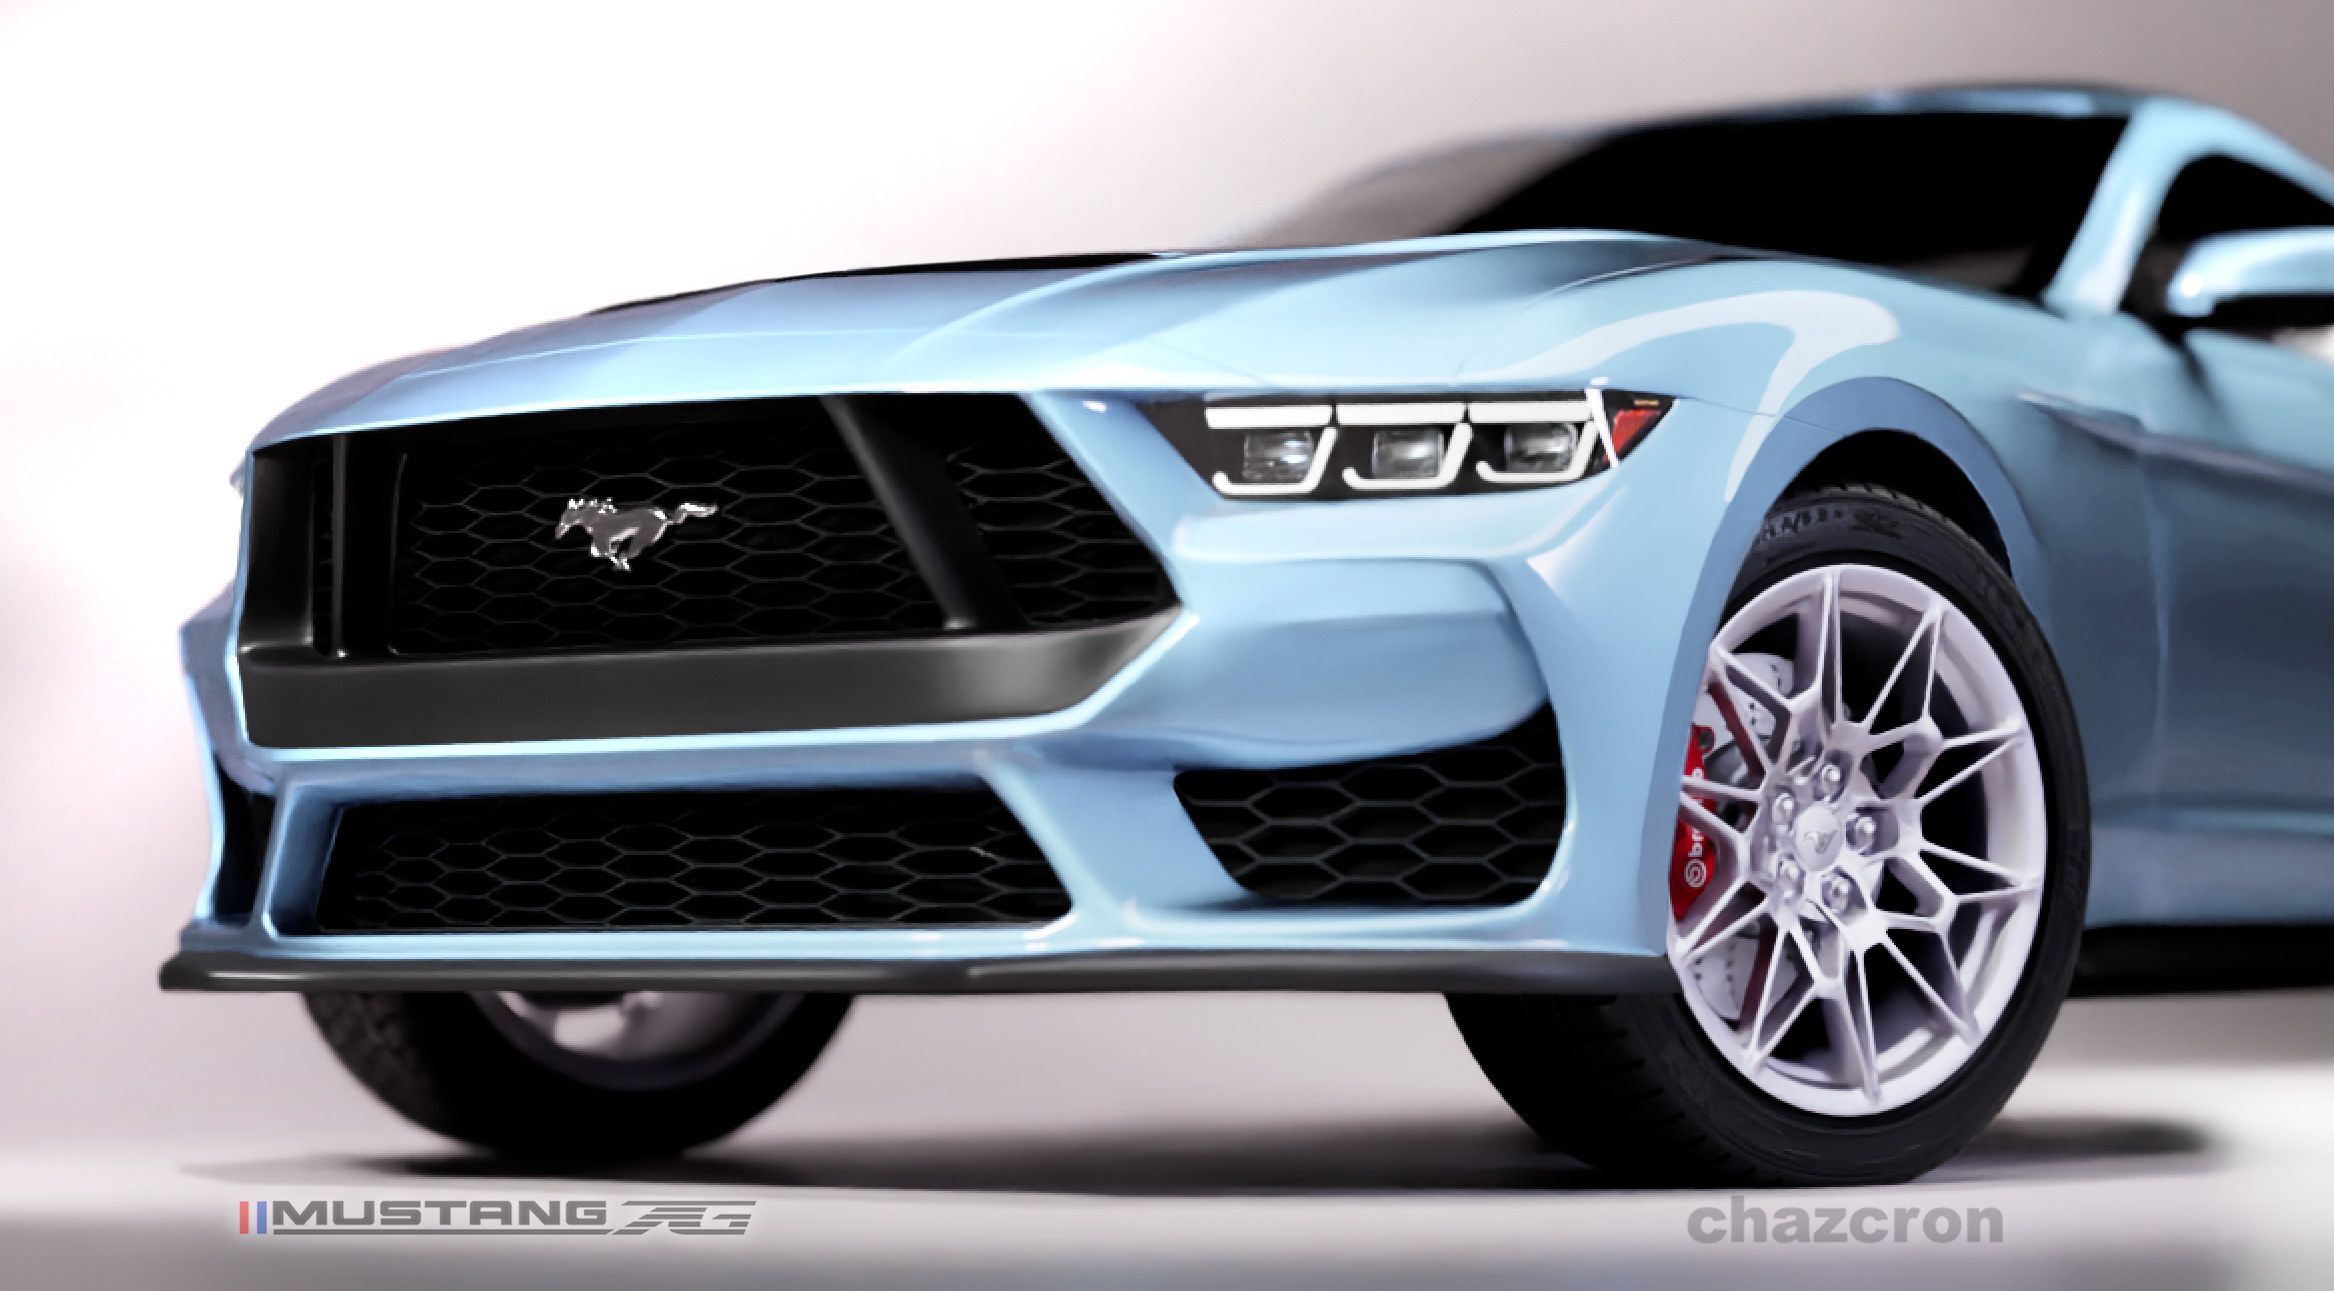 S650 Mustang chazcron weighs in... 7th gen 2023 Mustang S650 3D model & renderings in several colors! BrightPony